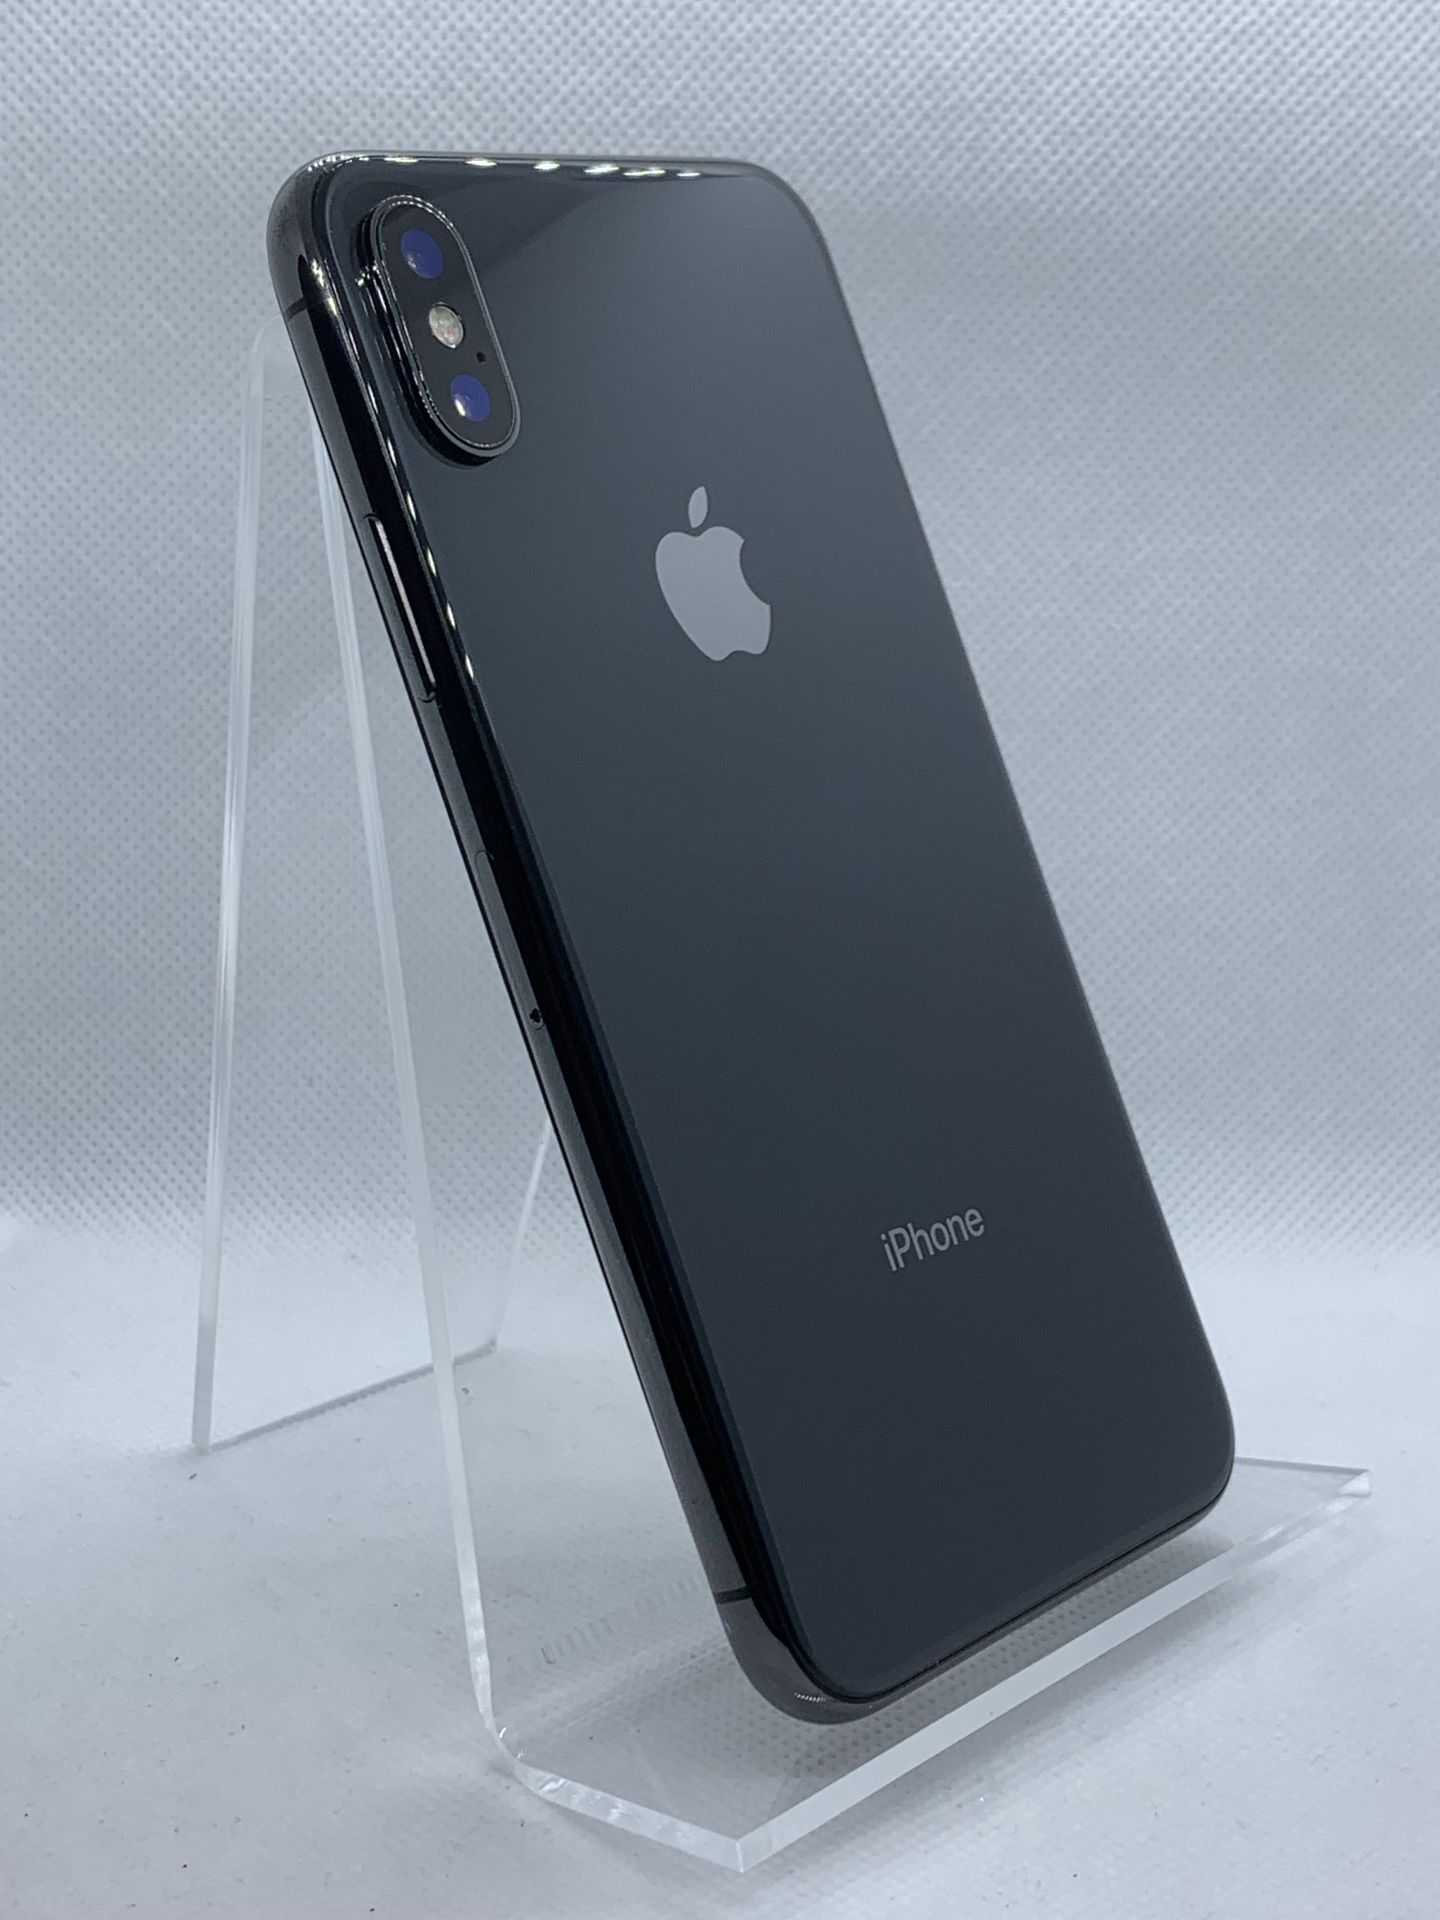 iPhone X 64GB Space Grey Factory Unlocked 